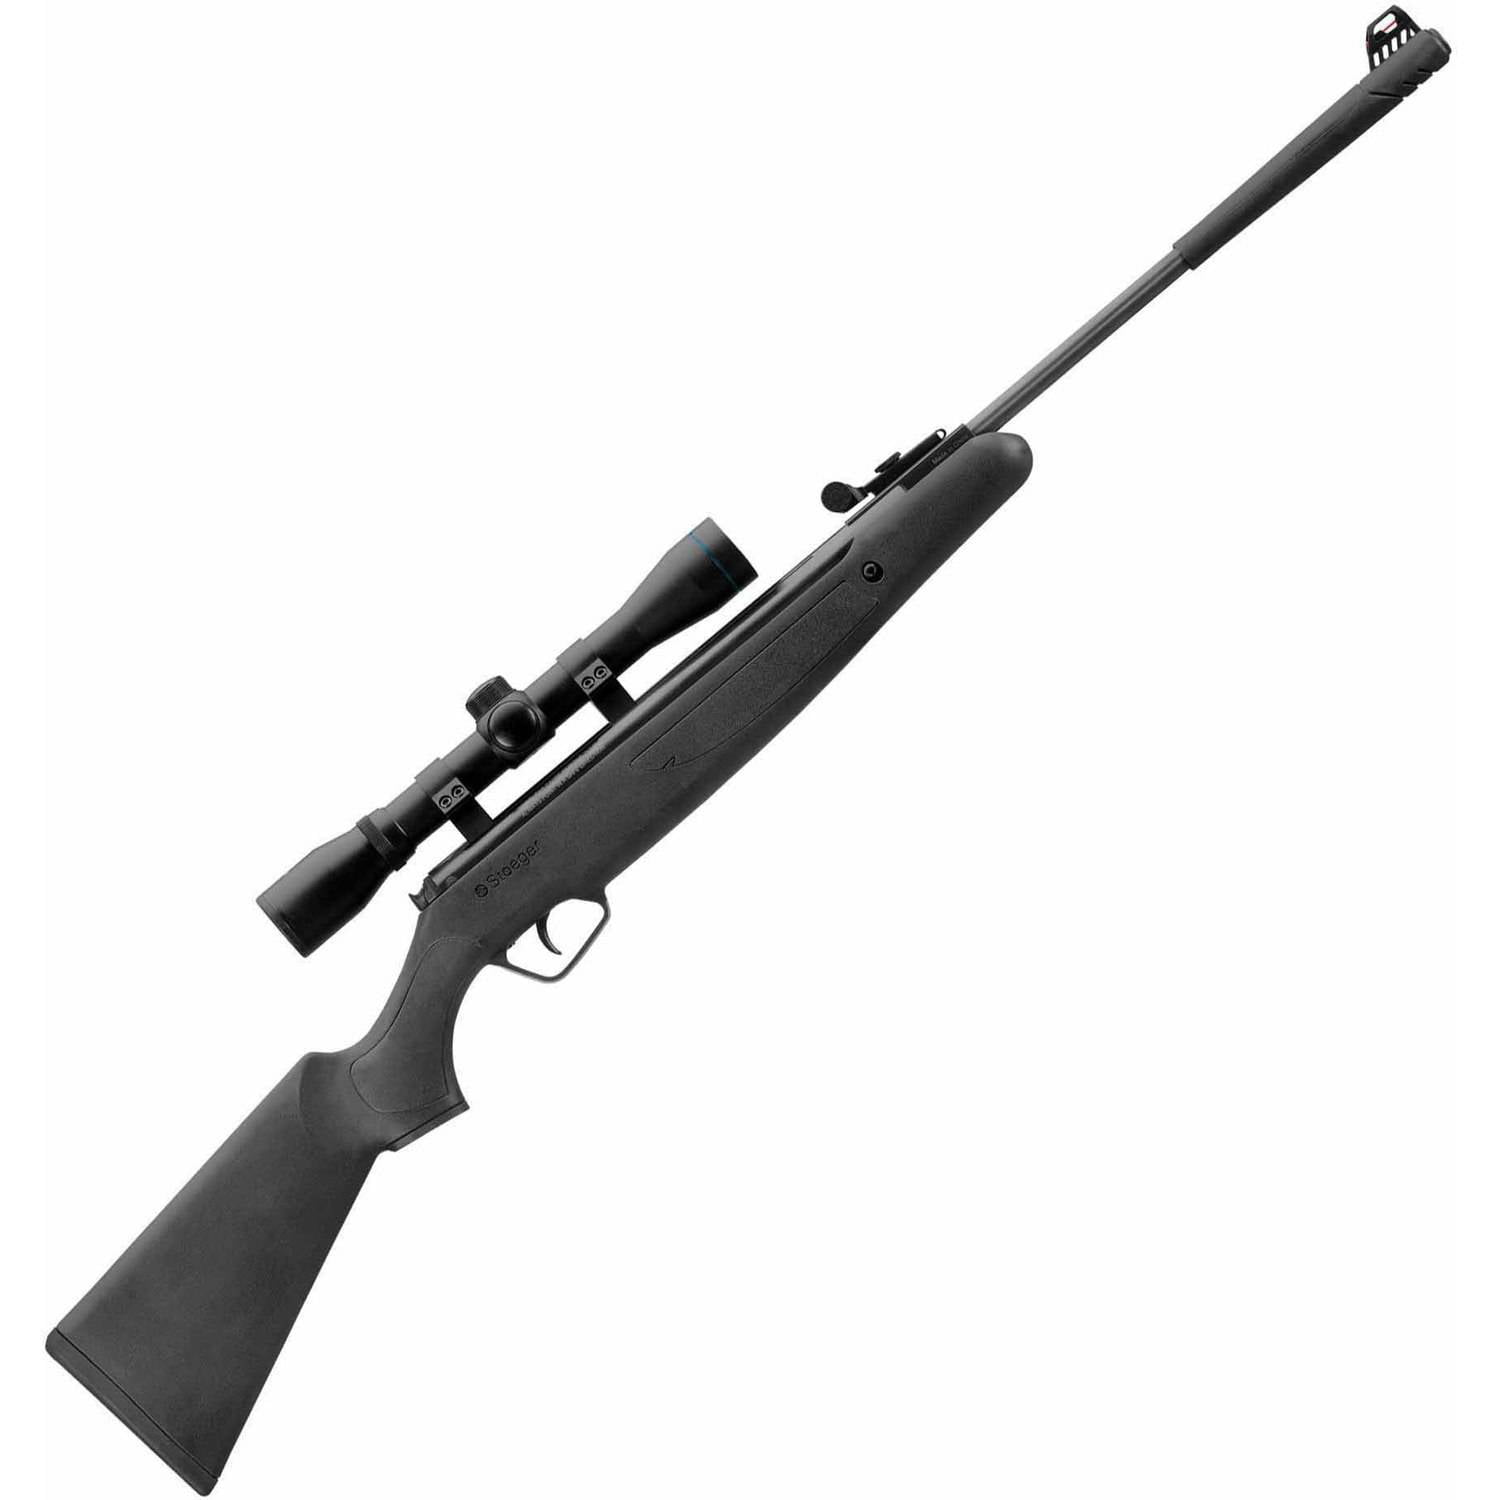 Stoeger X10  Air Rifle  Walmart com Walmart com